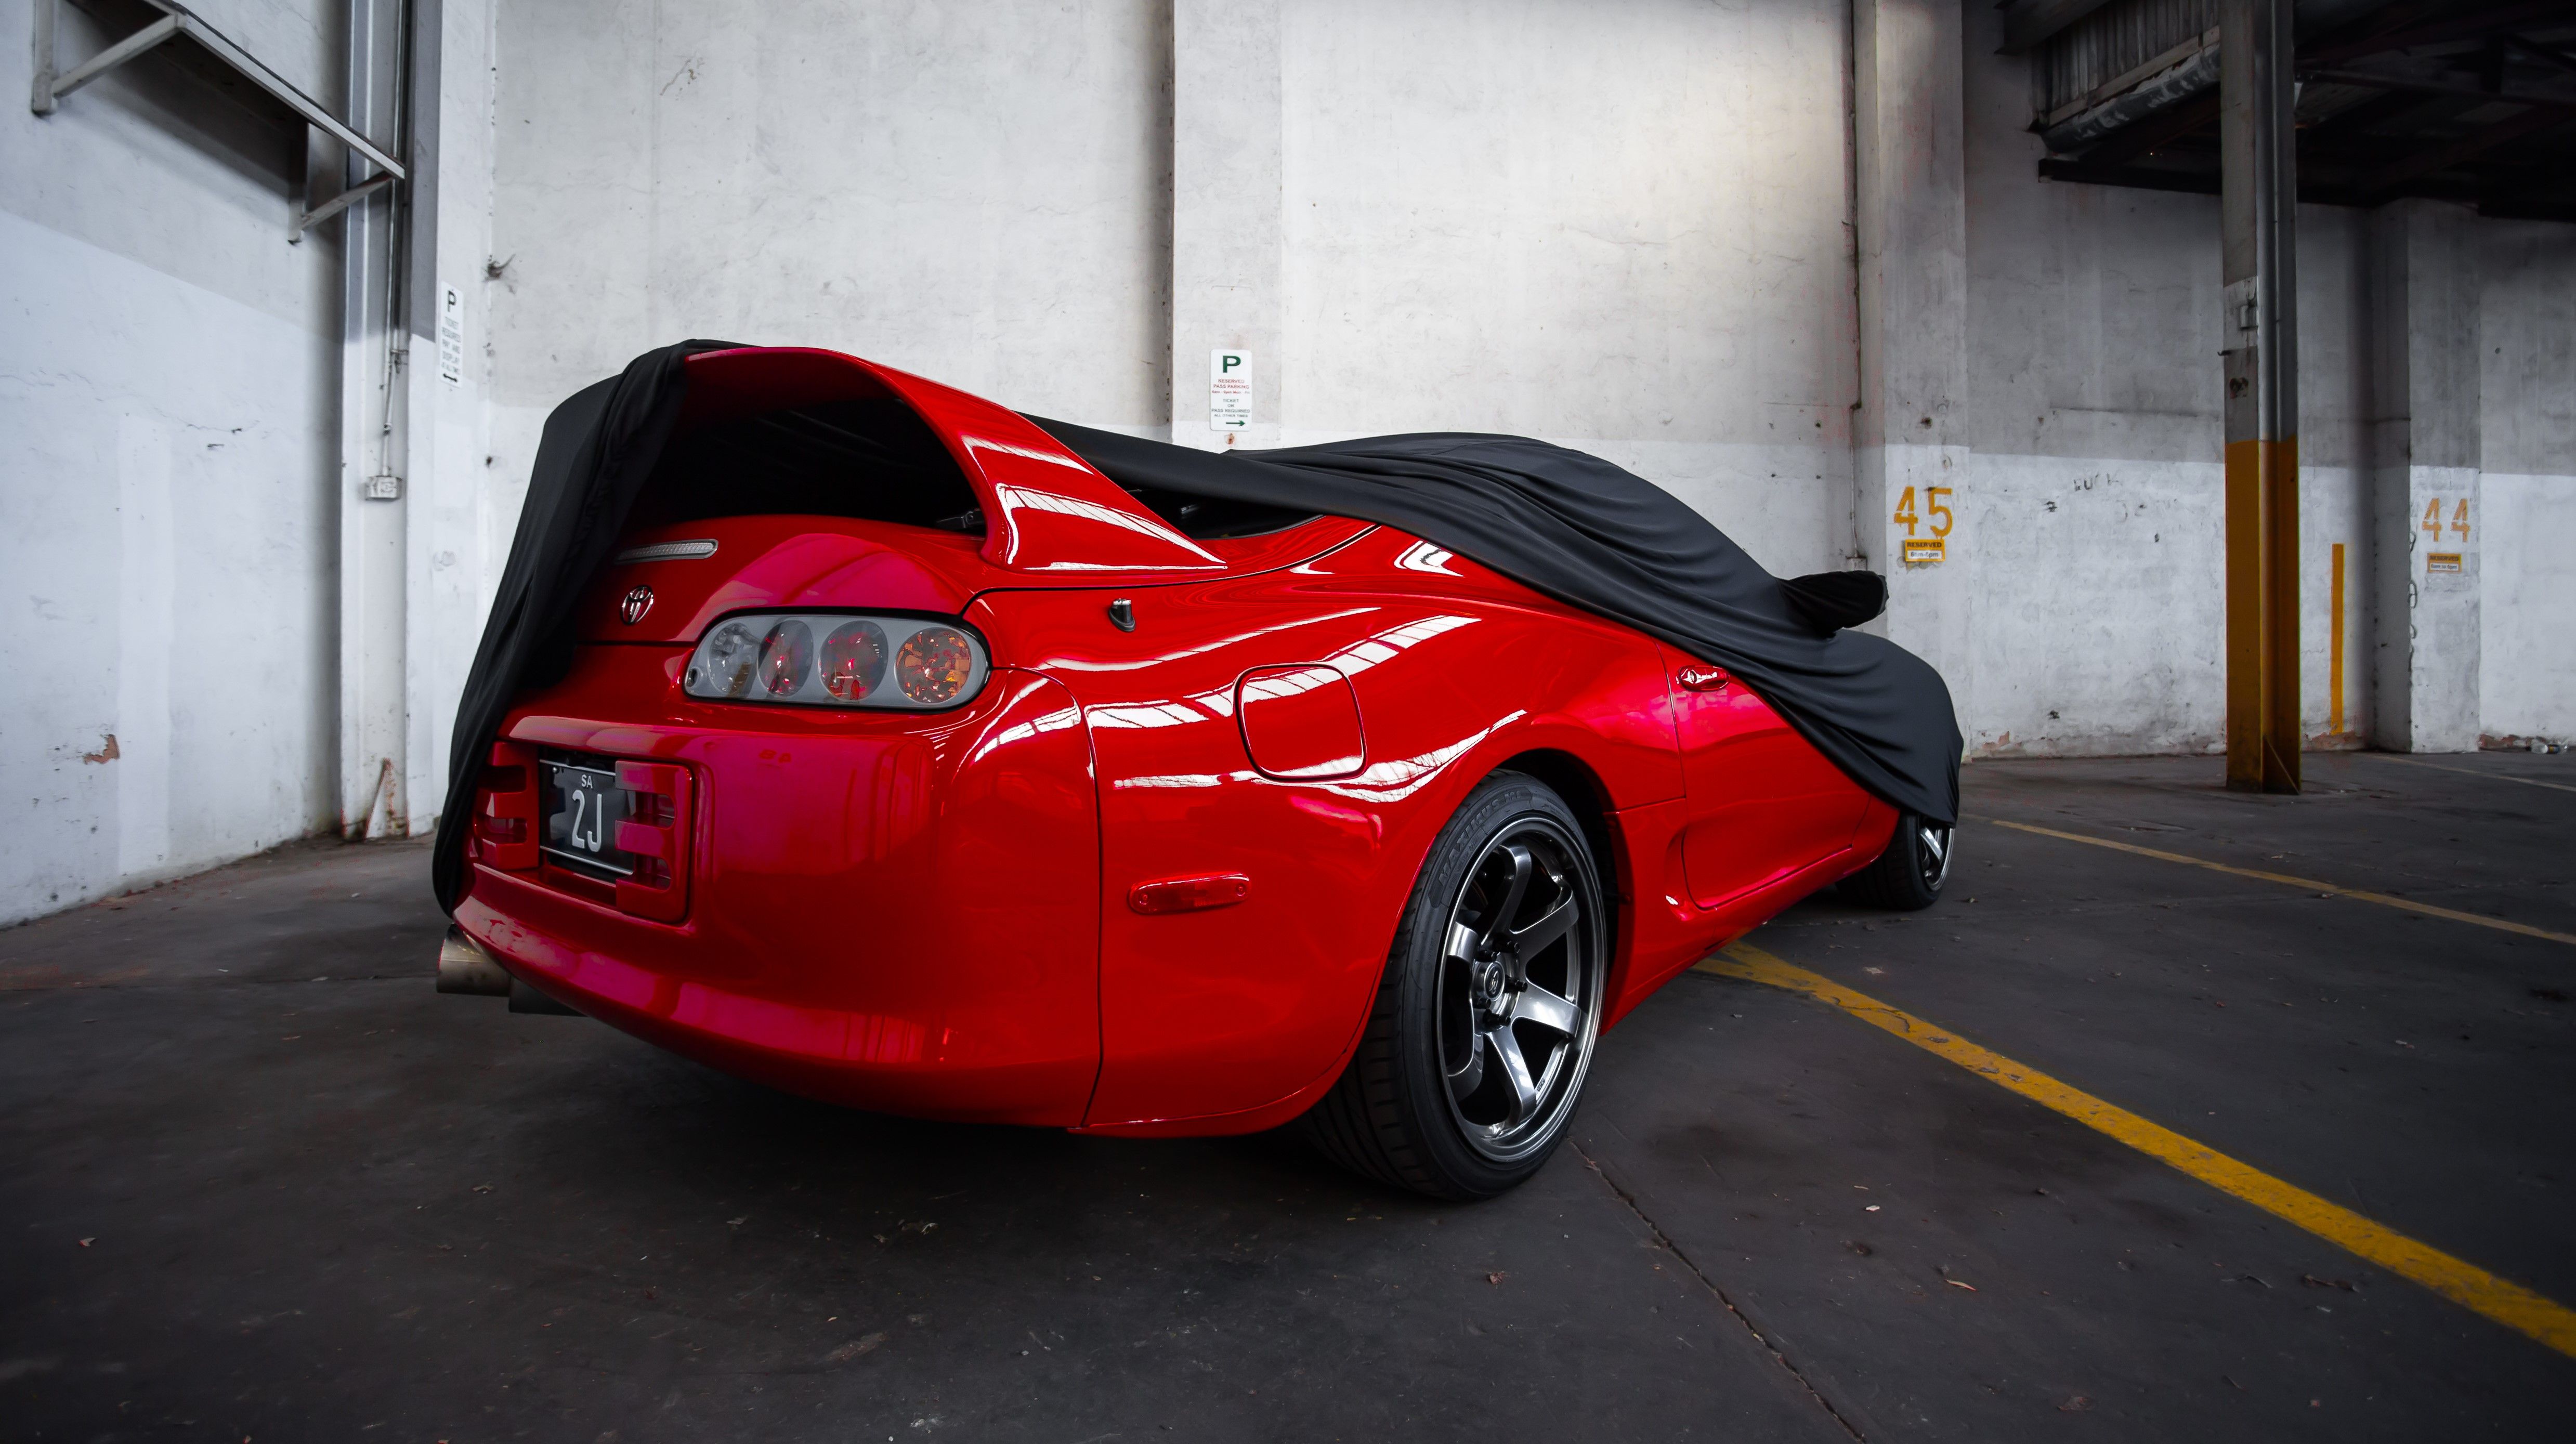 Mazda FD RX7 (FD3S) Indoor Car Cover – Parked Pride Autocare